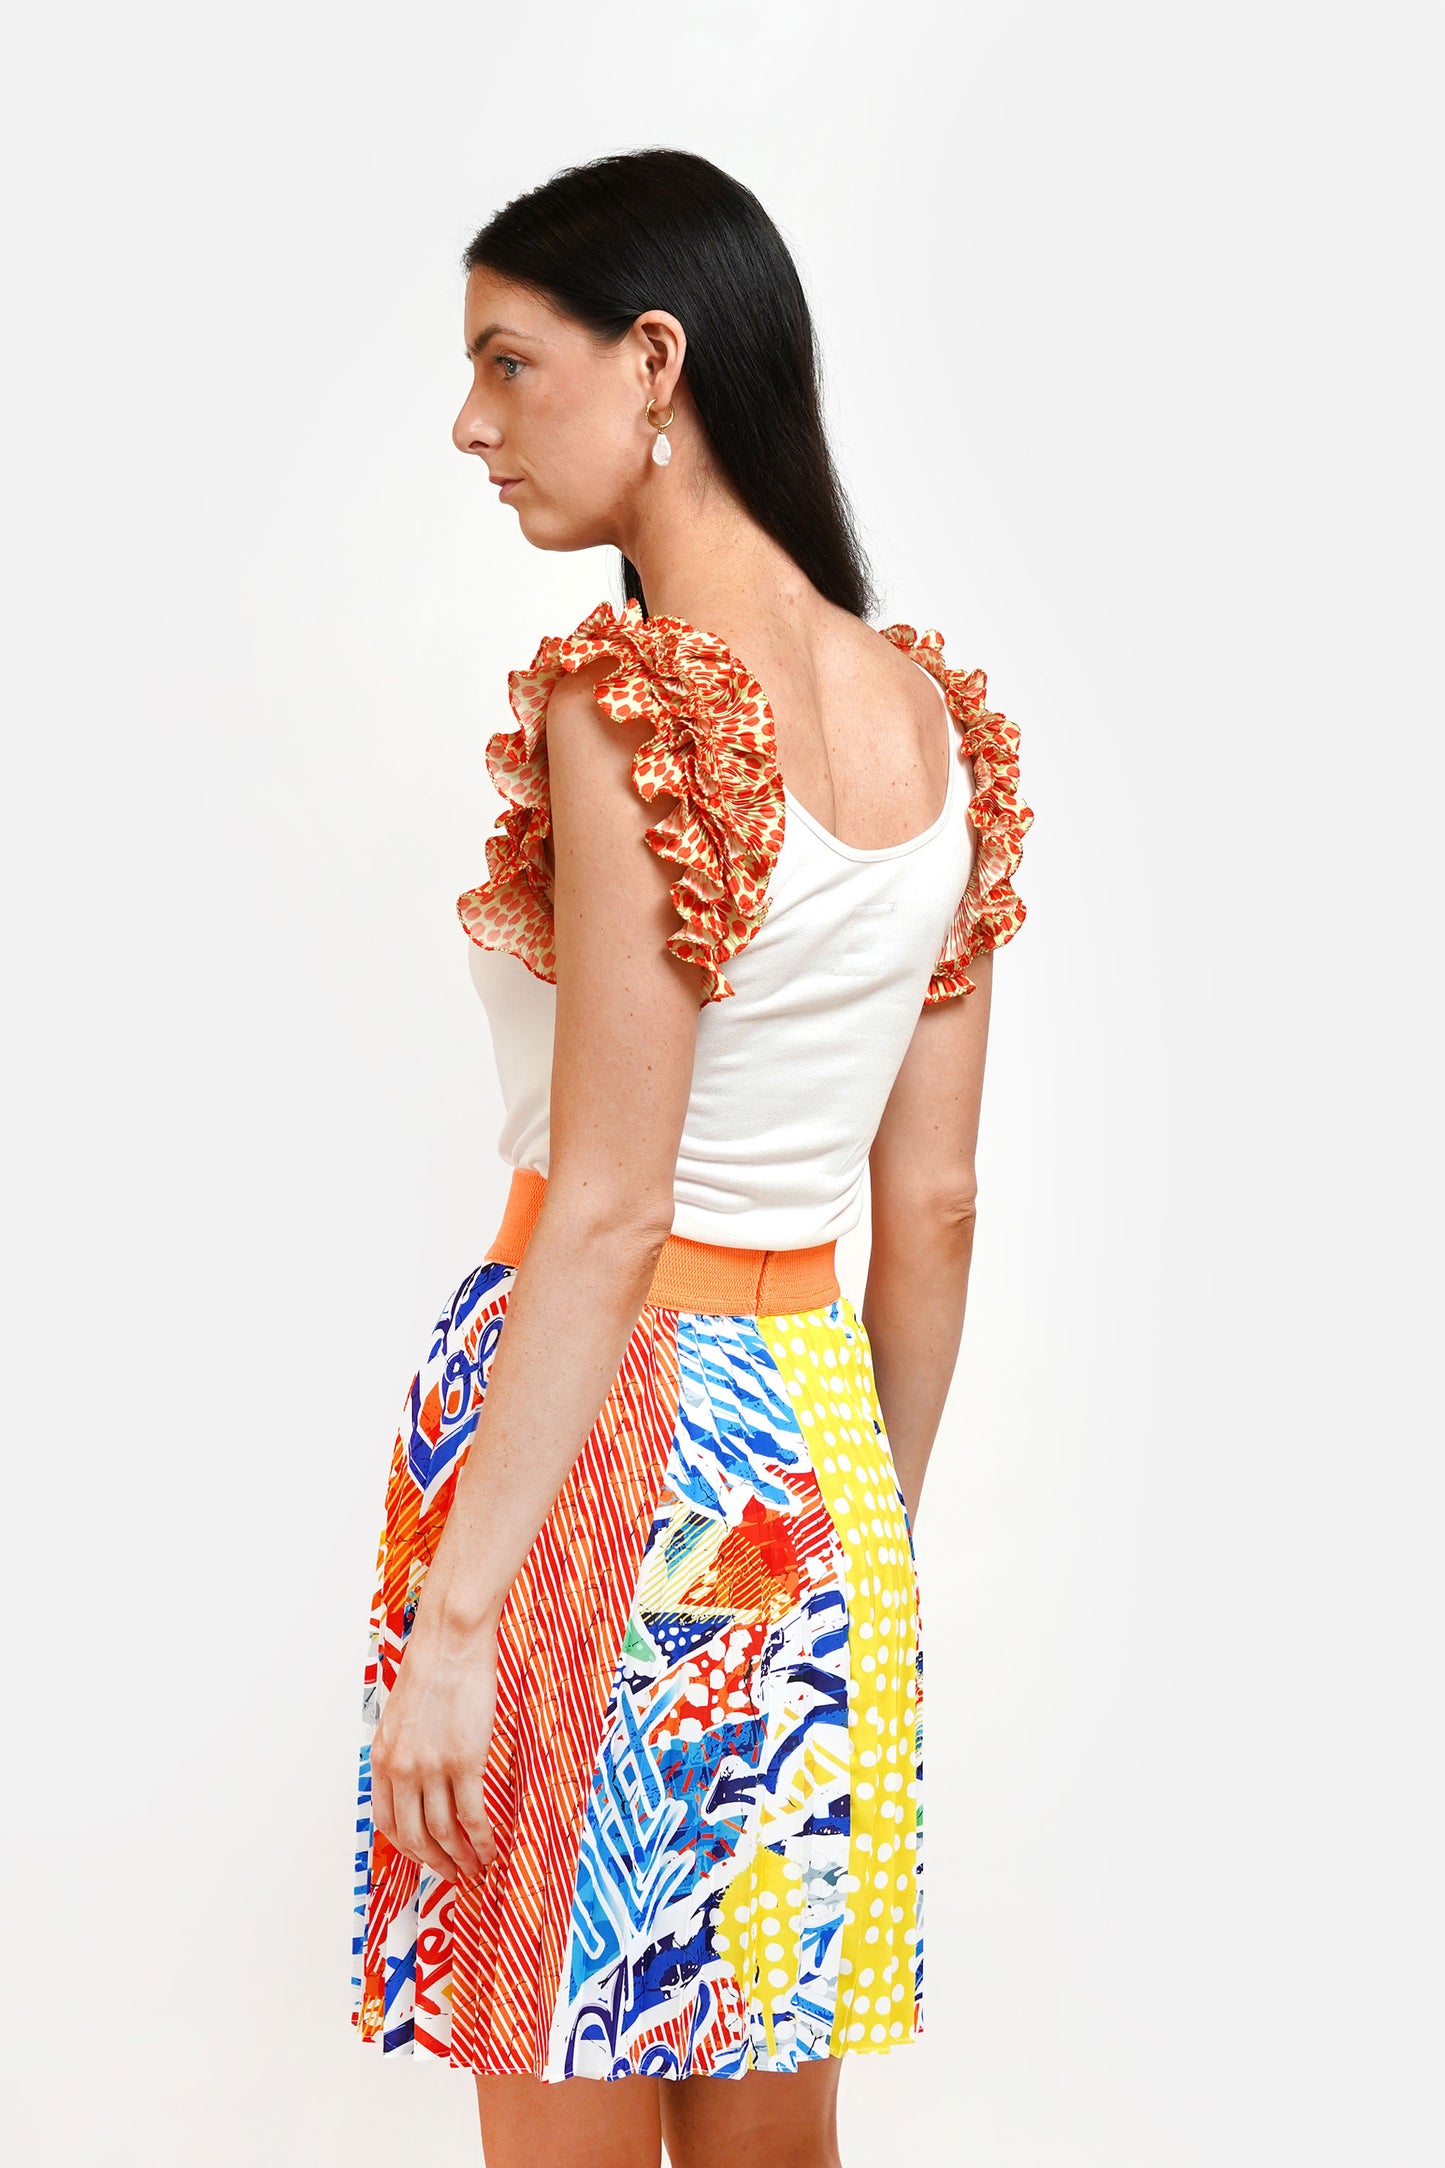 Skirt Mini Lined Abstract Print